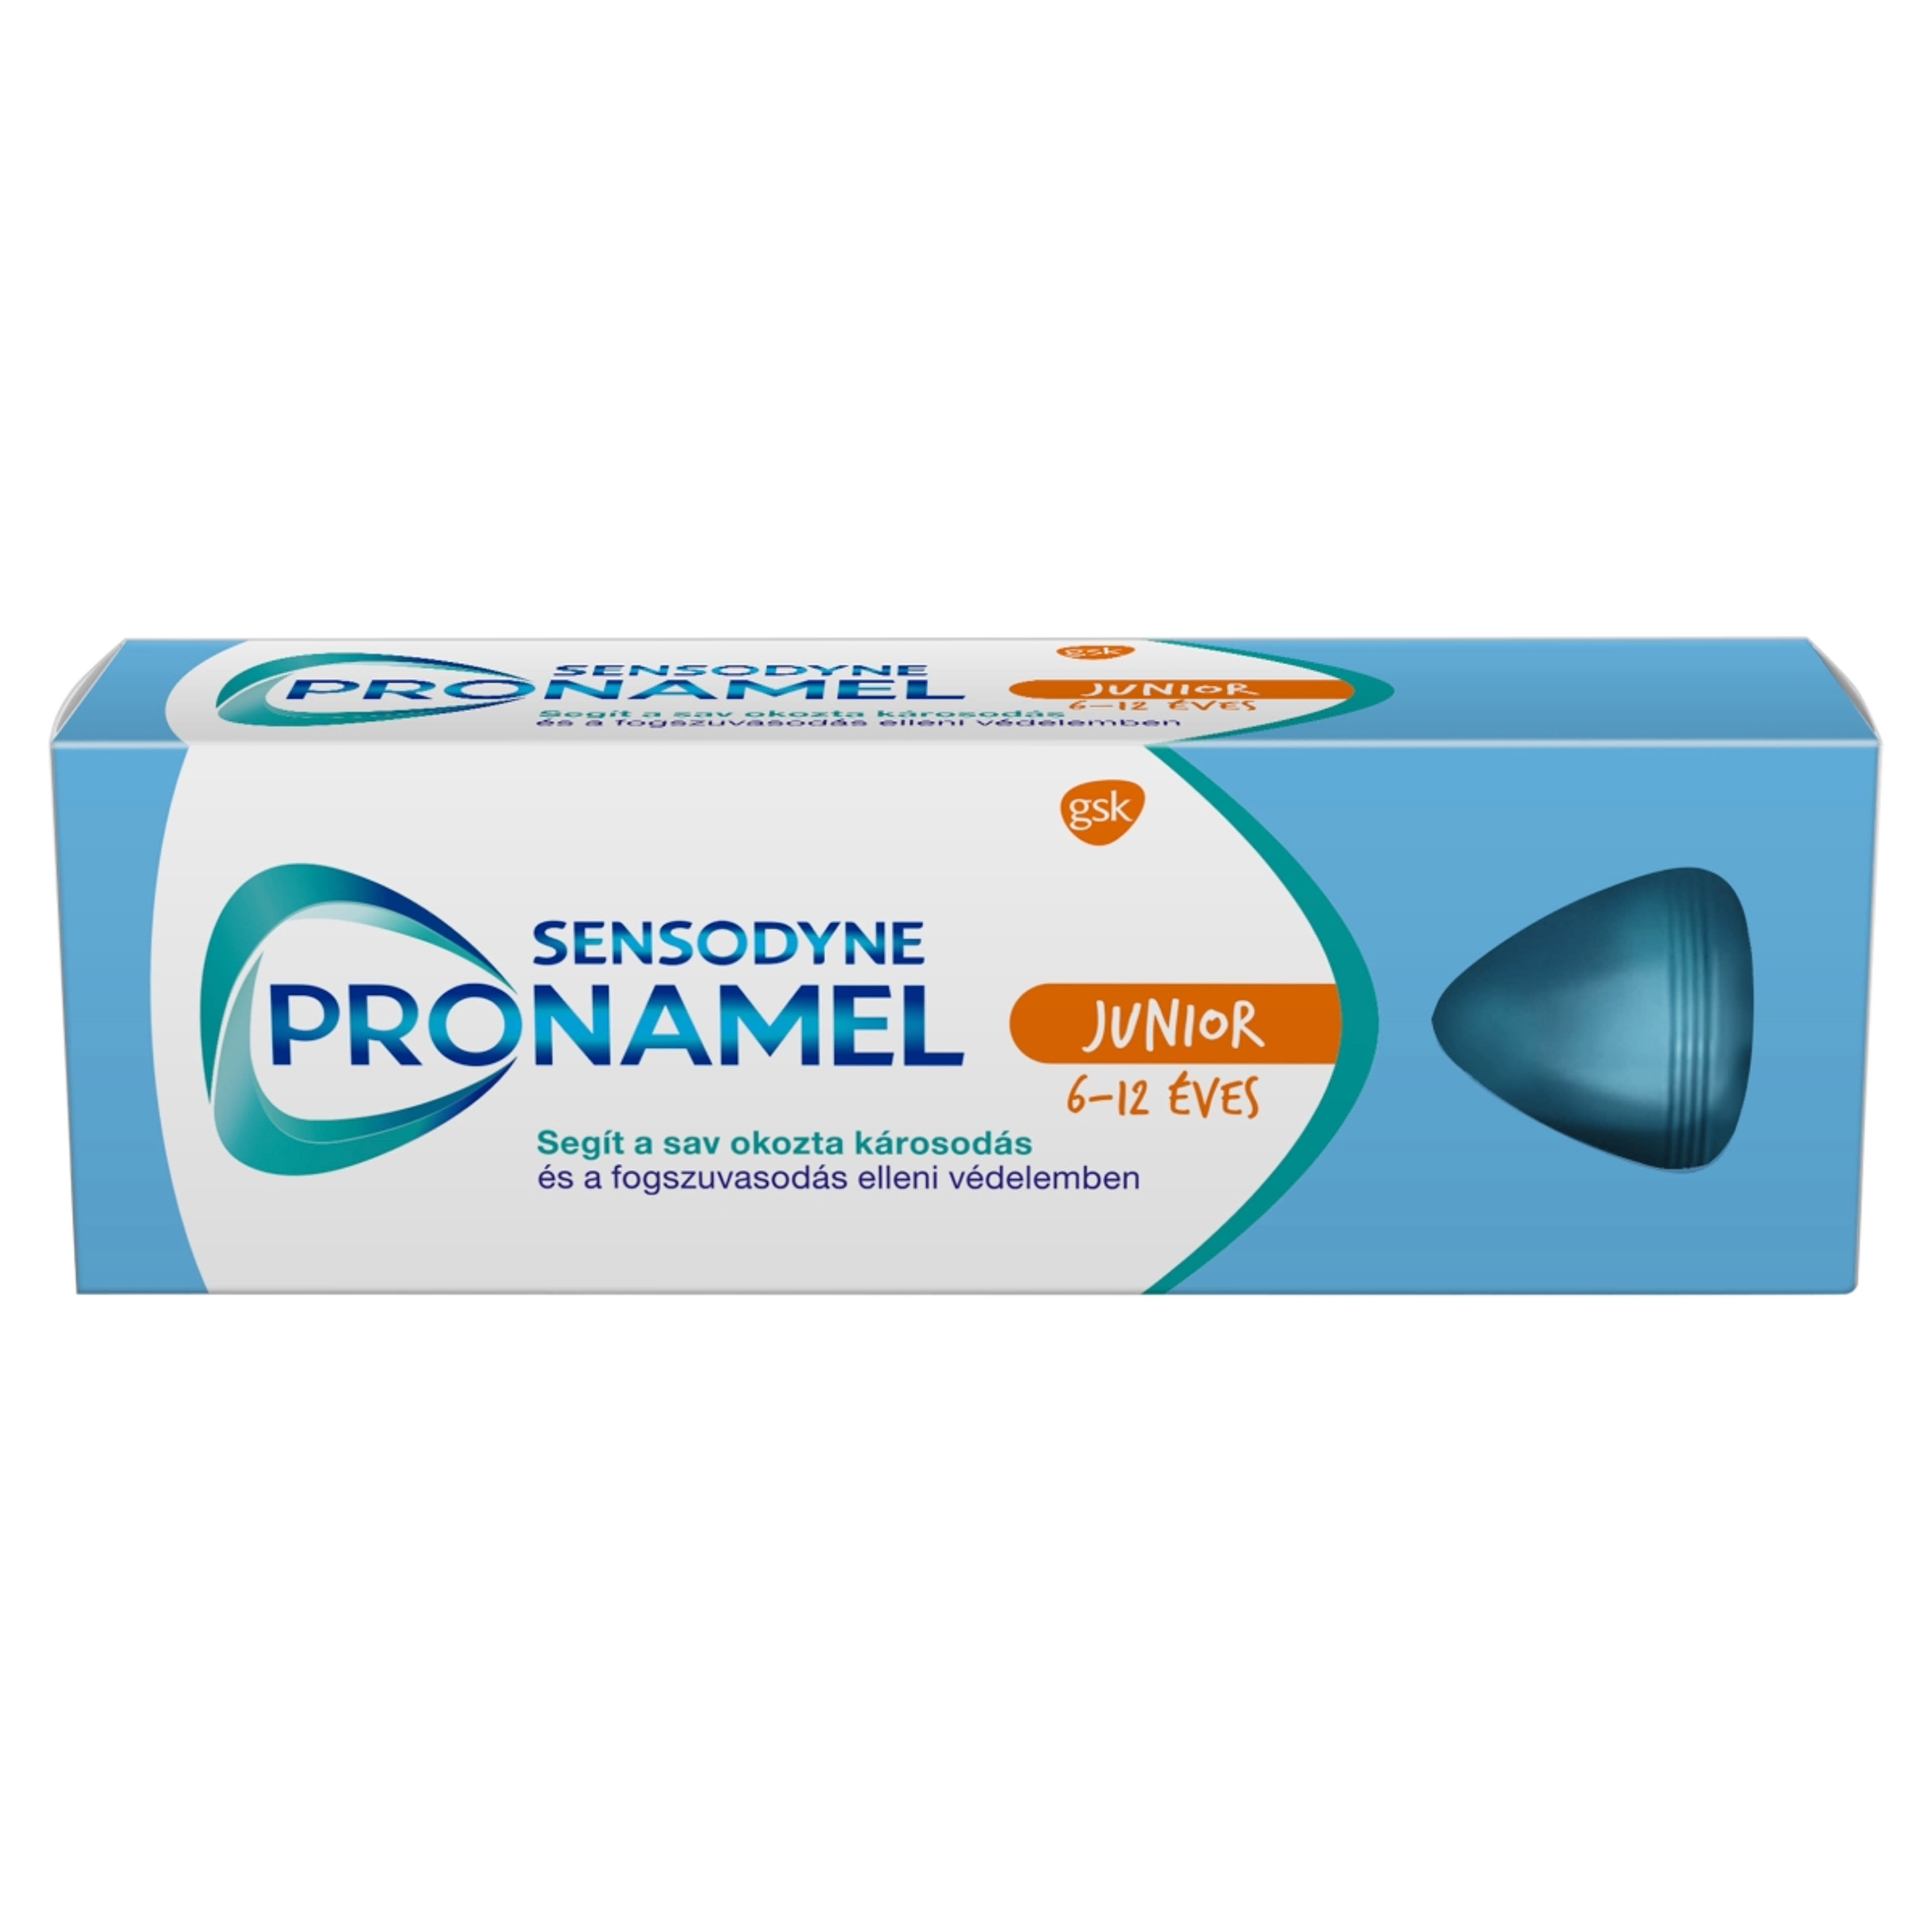 Sensodyne Pronamel Junior fogkrém - 50 ml-1